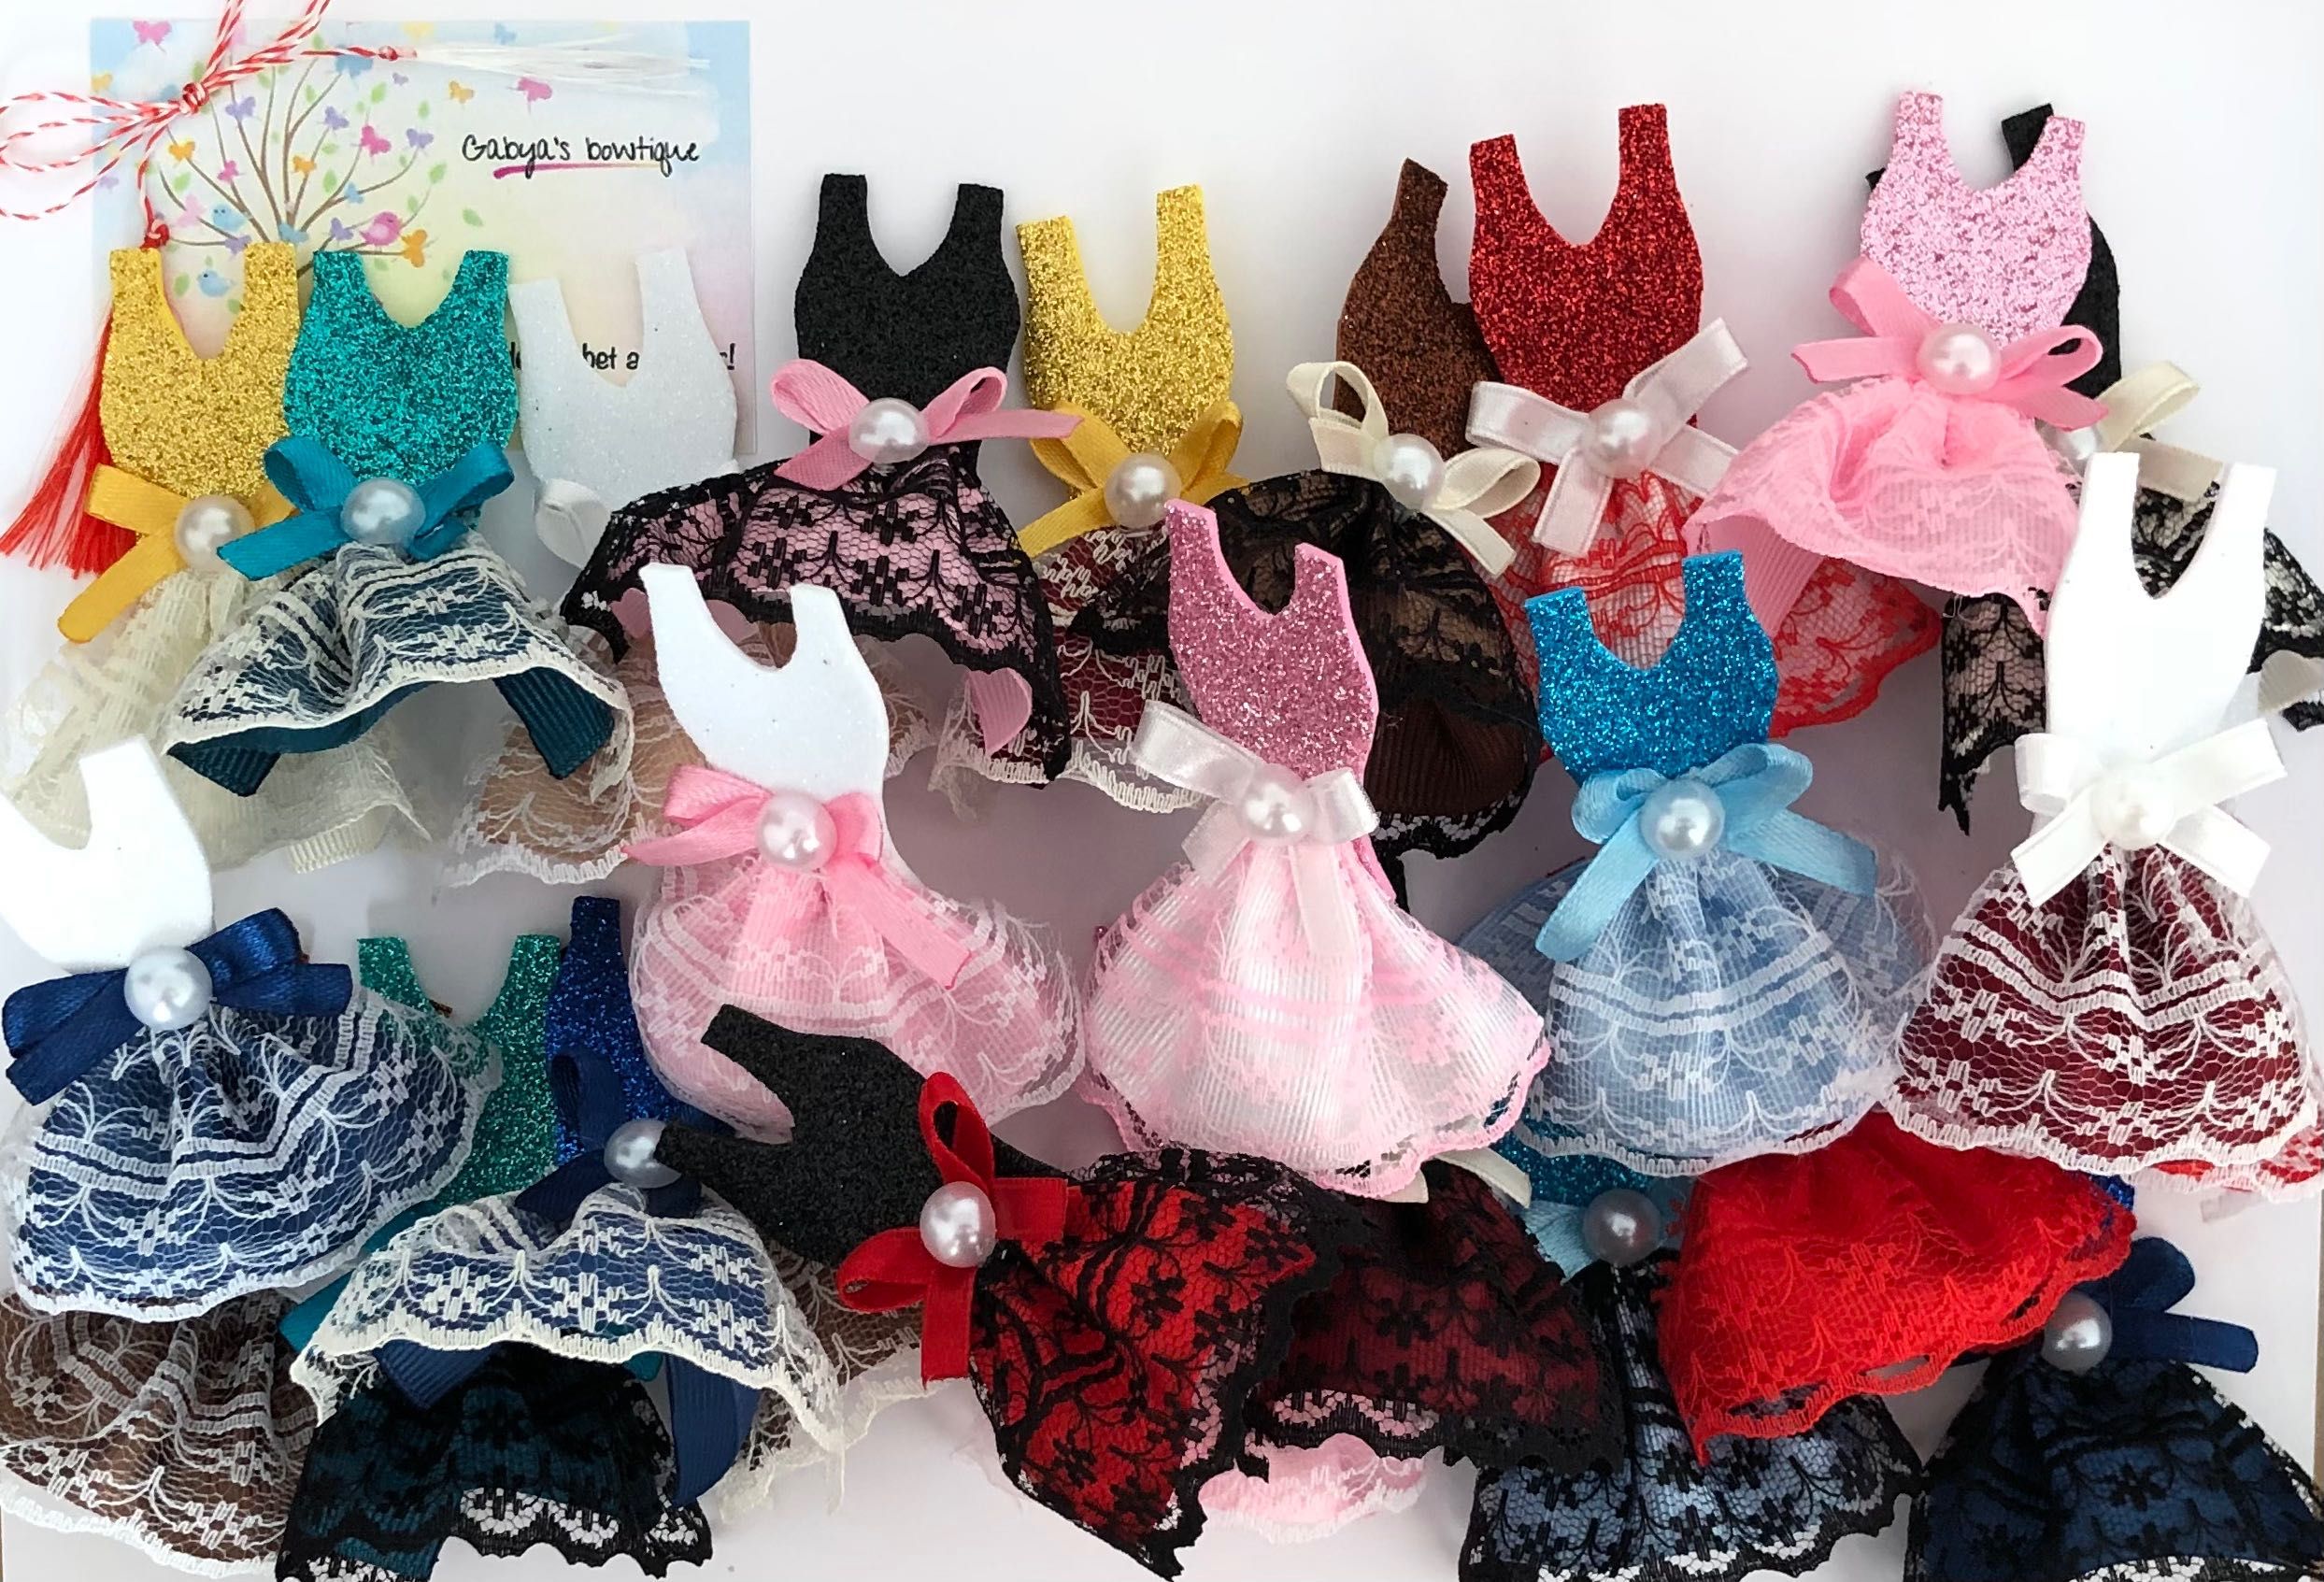 Mărțișoare rochițe fetițe